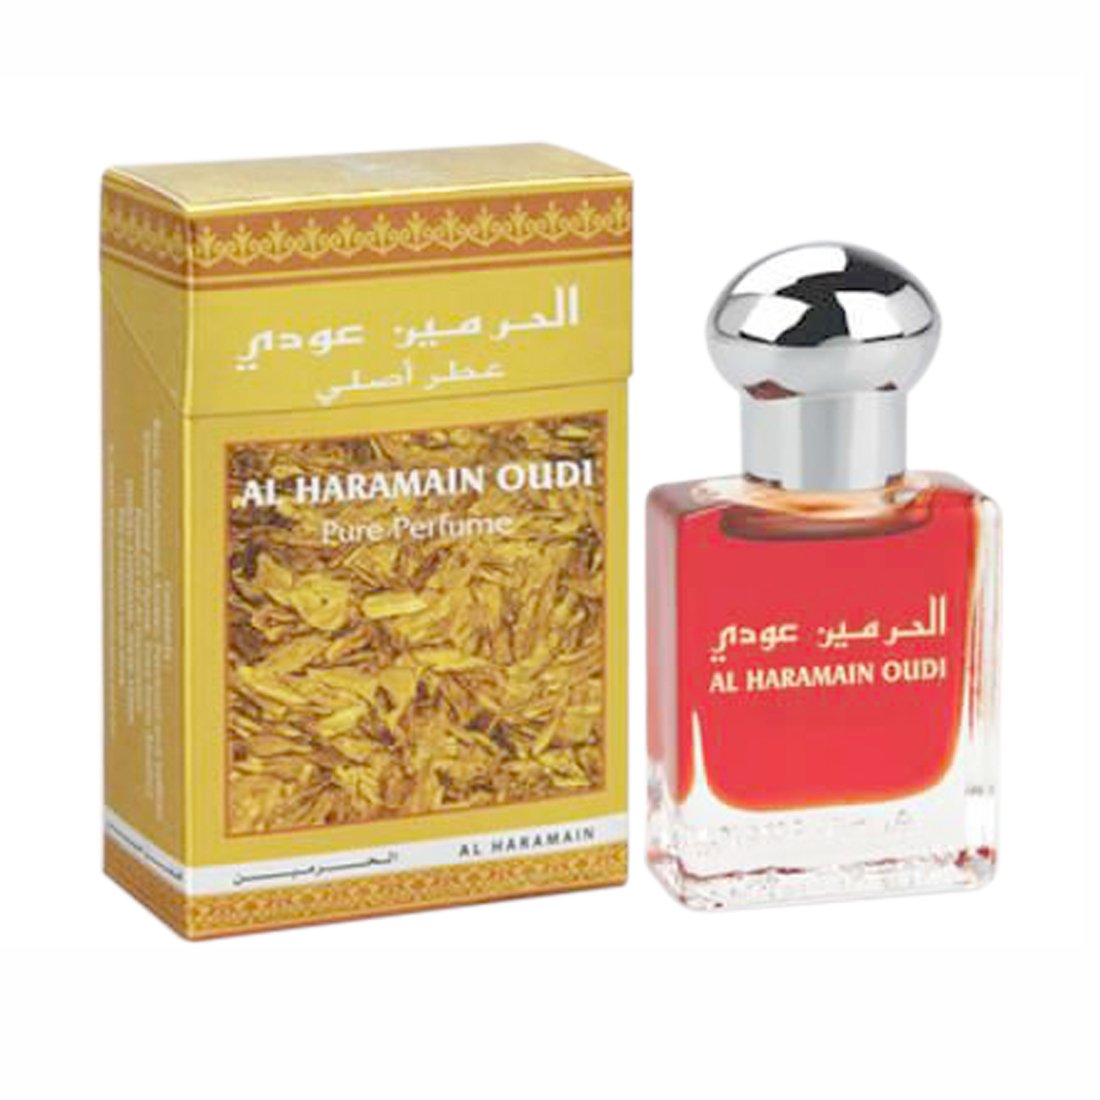 Al Haramain Oudi Fragrance Pure Original Roll on Perfume Oil (Attar) - 15 ml